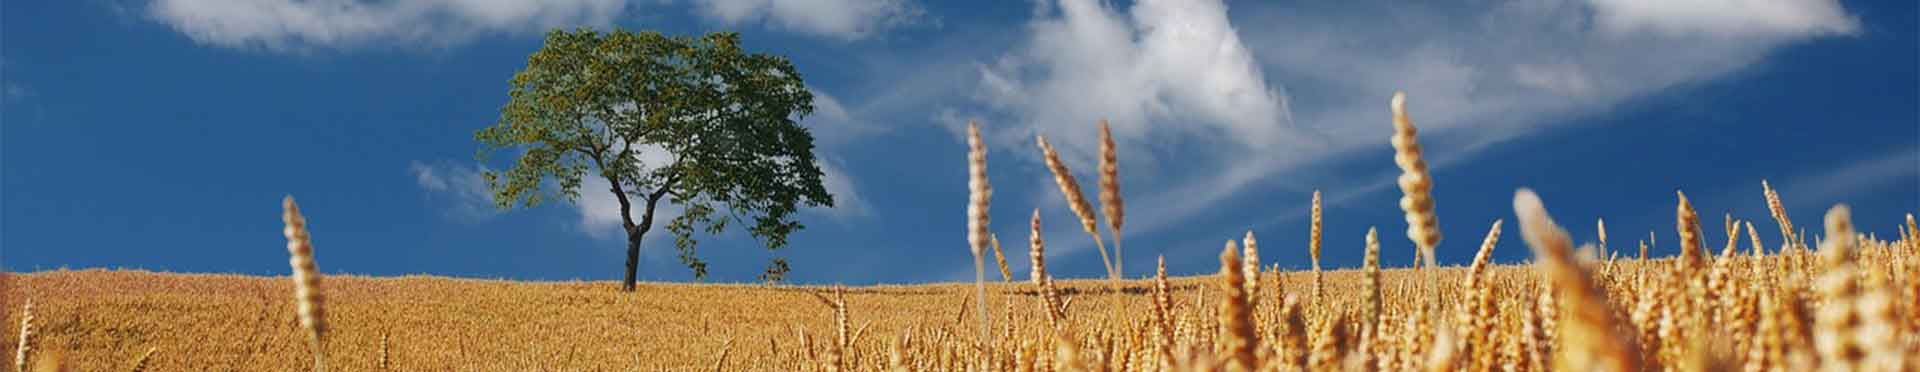 Diagnóstico regulatorio de fertilizantes en campo trigo